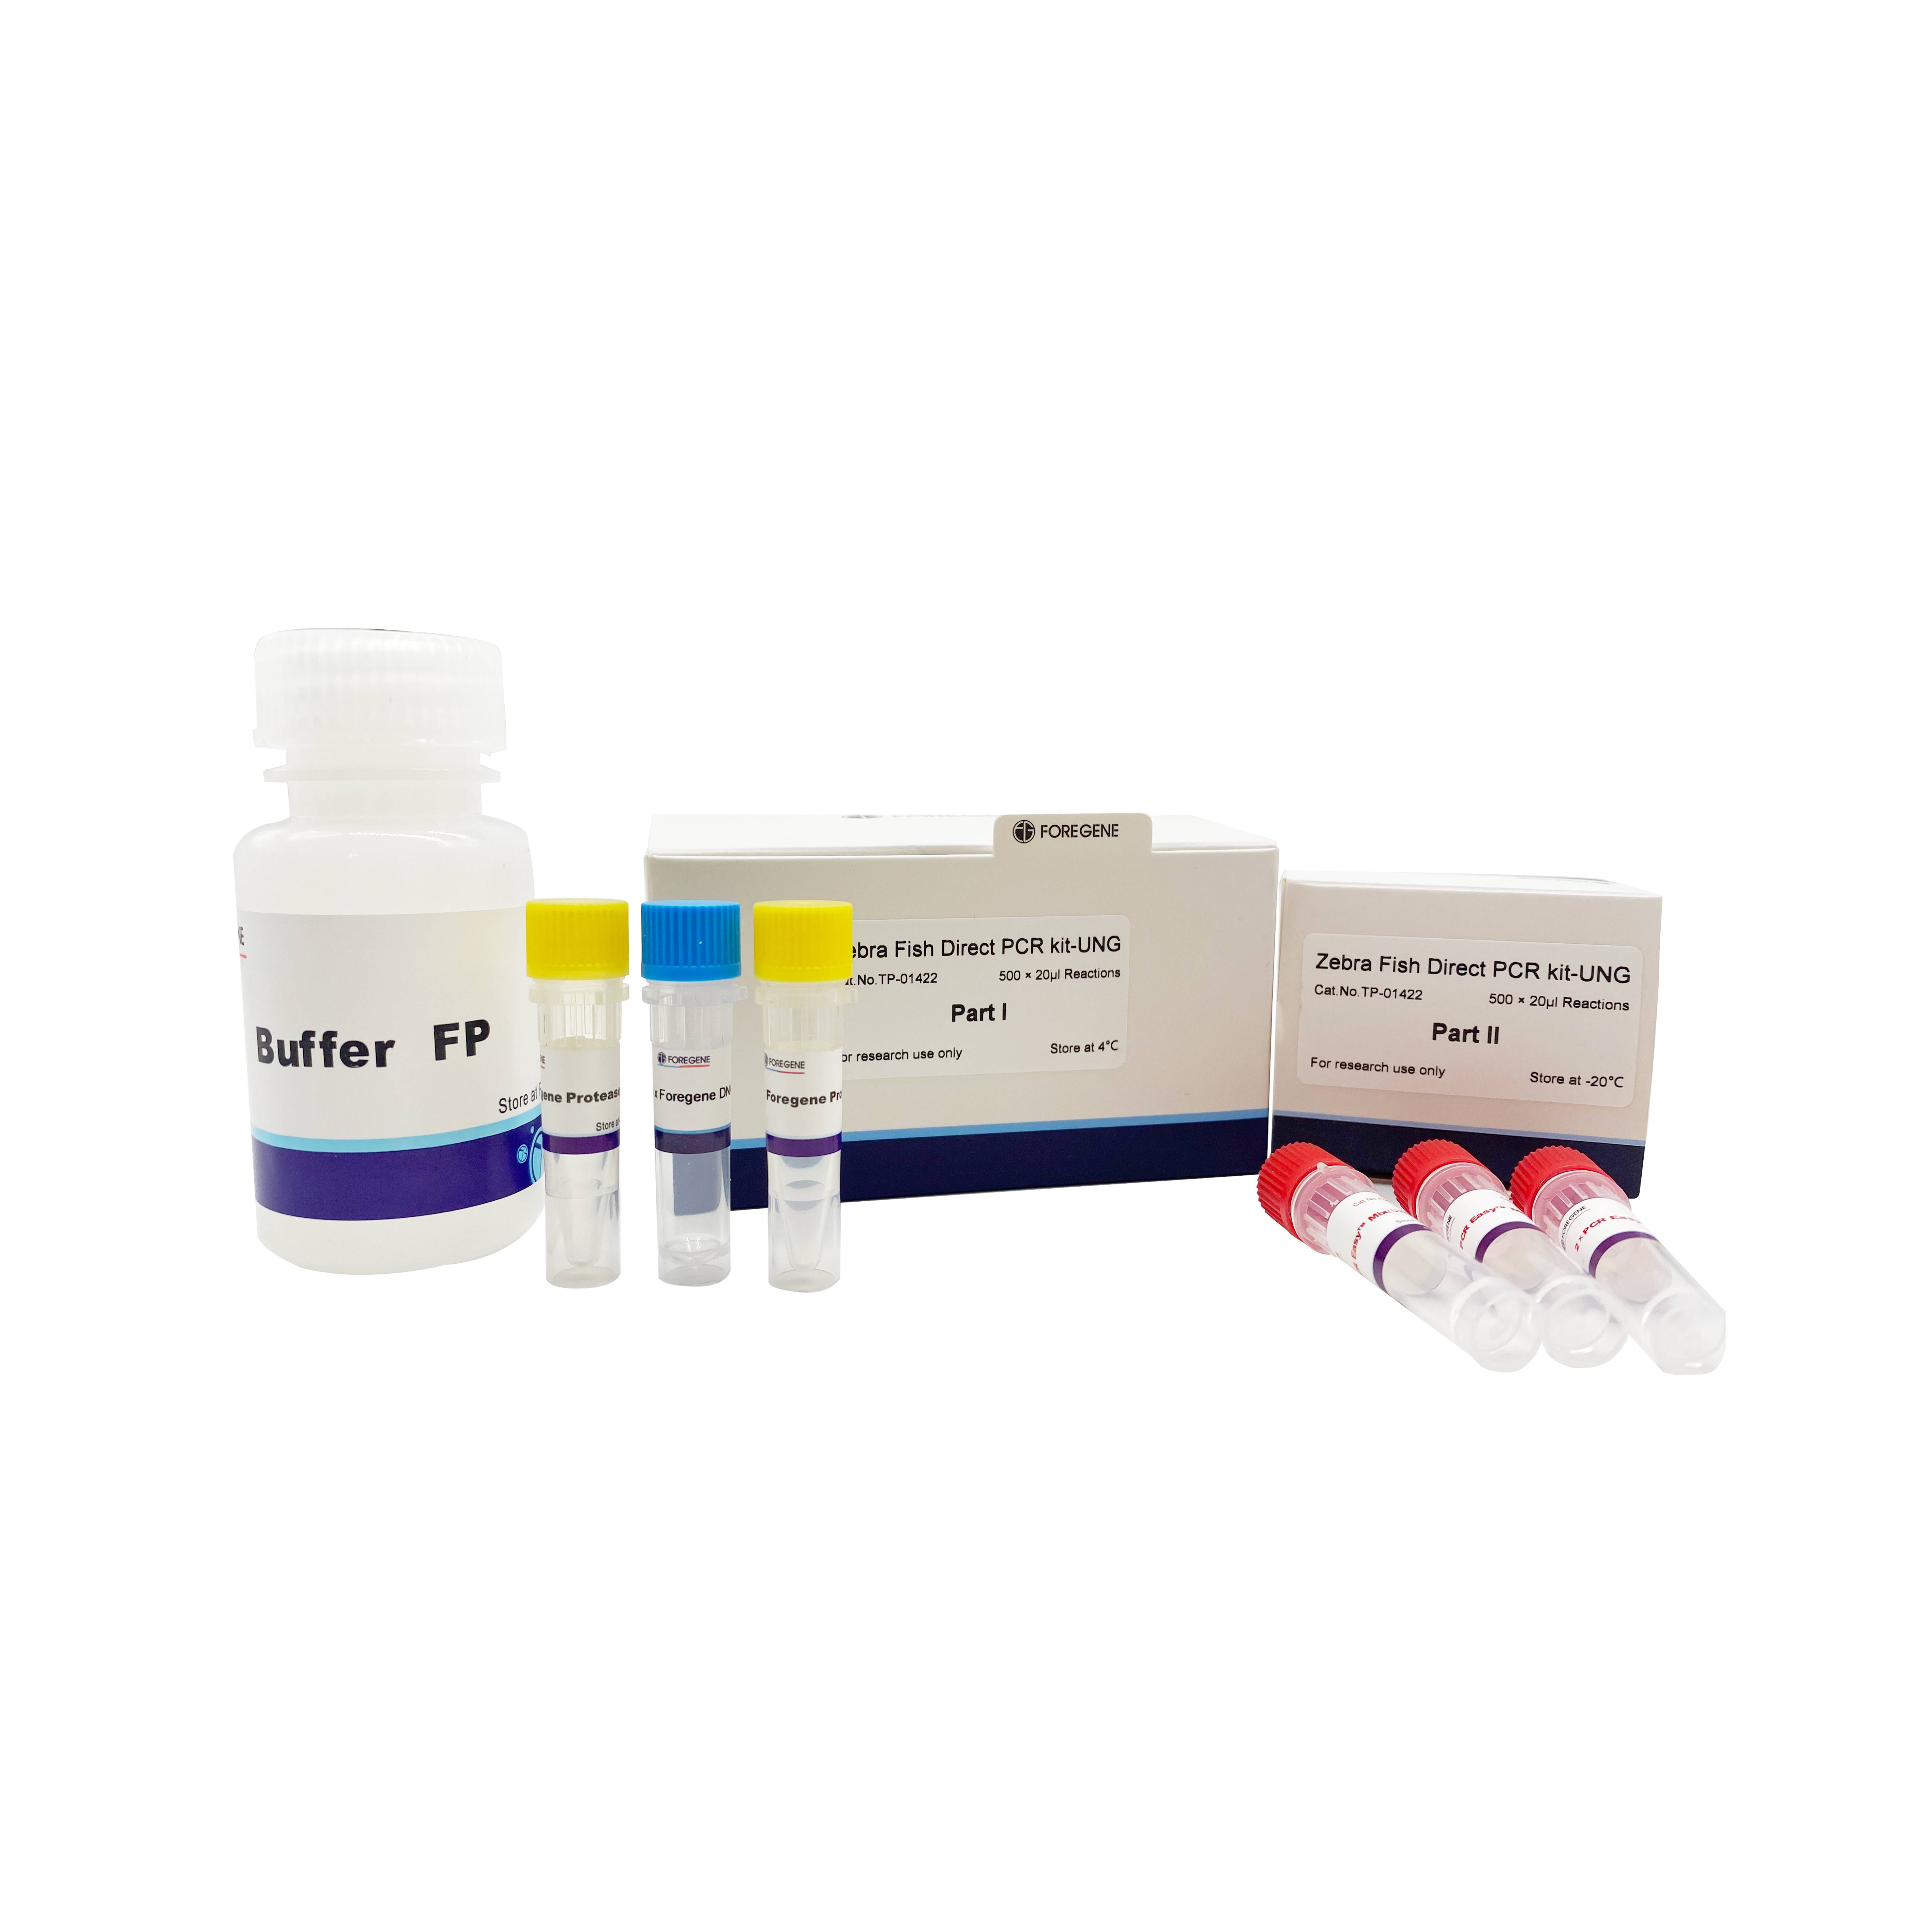 Zebra Fish Direct PCR Kit-UNG Direct PCR Lysis Reagent (pez cebra)